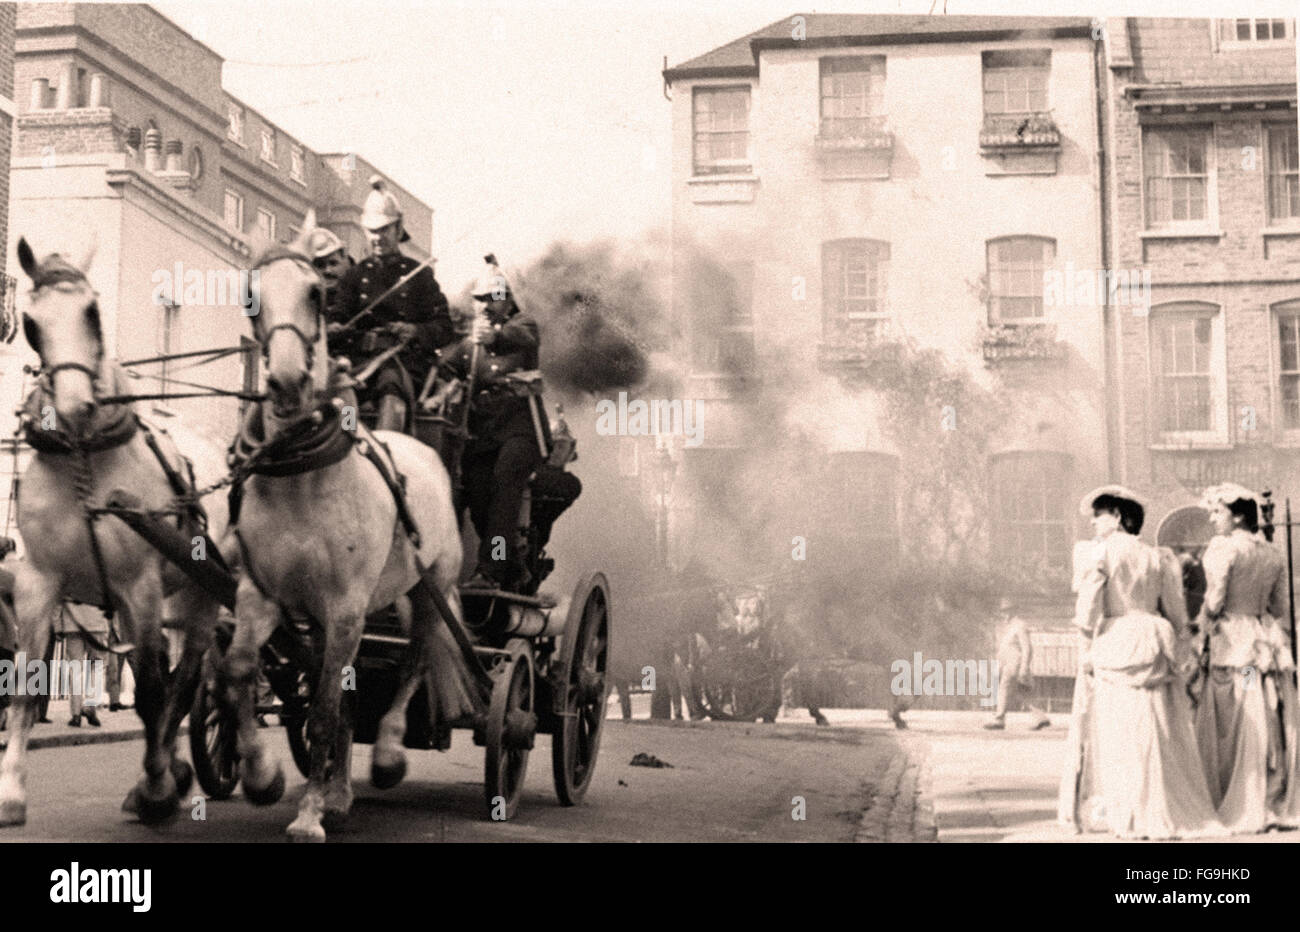 London in 1860 - Firemen on cart Stock Photo